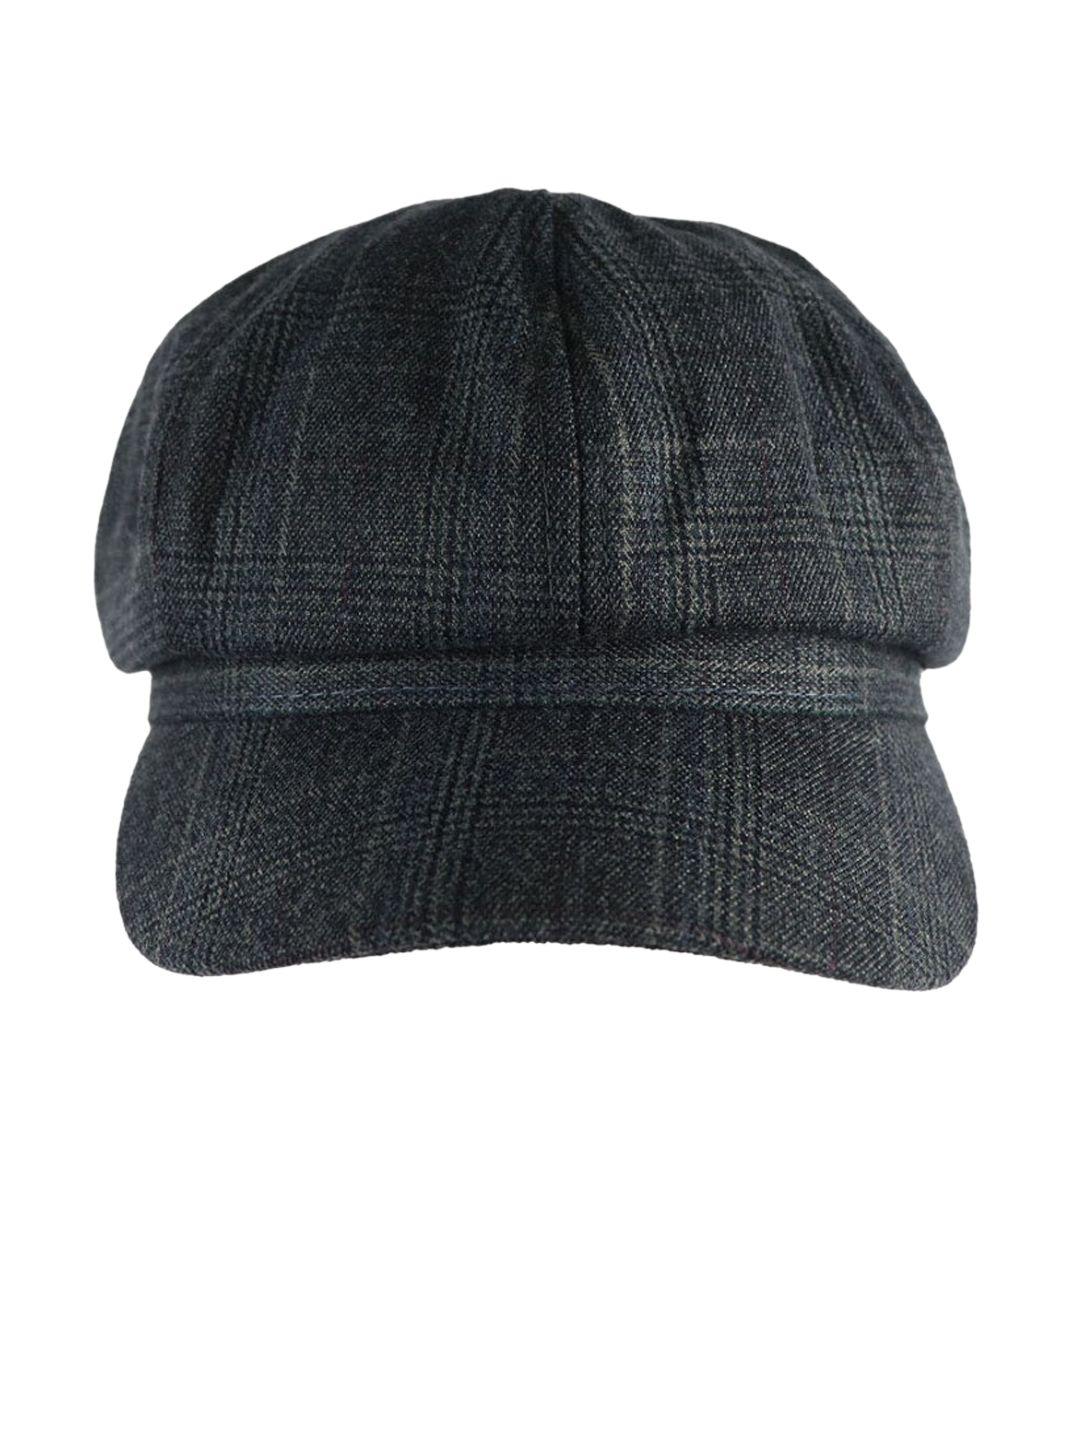 isweven unisex black self design visor cap